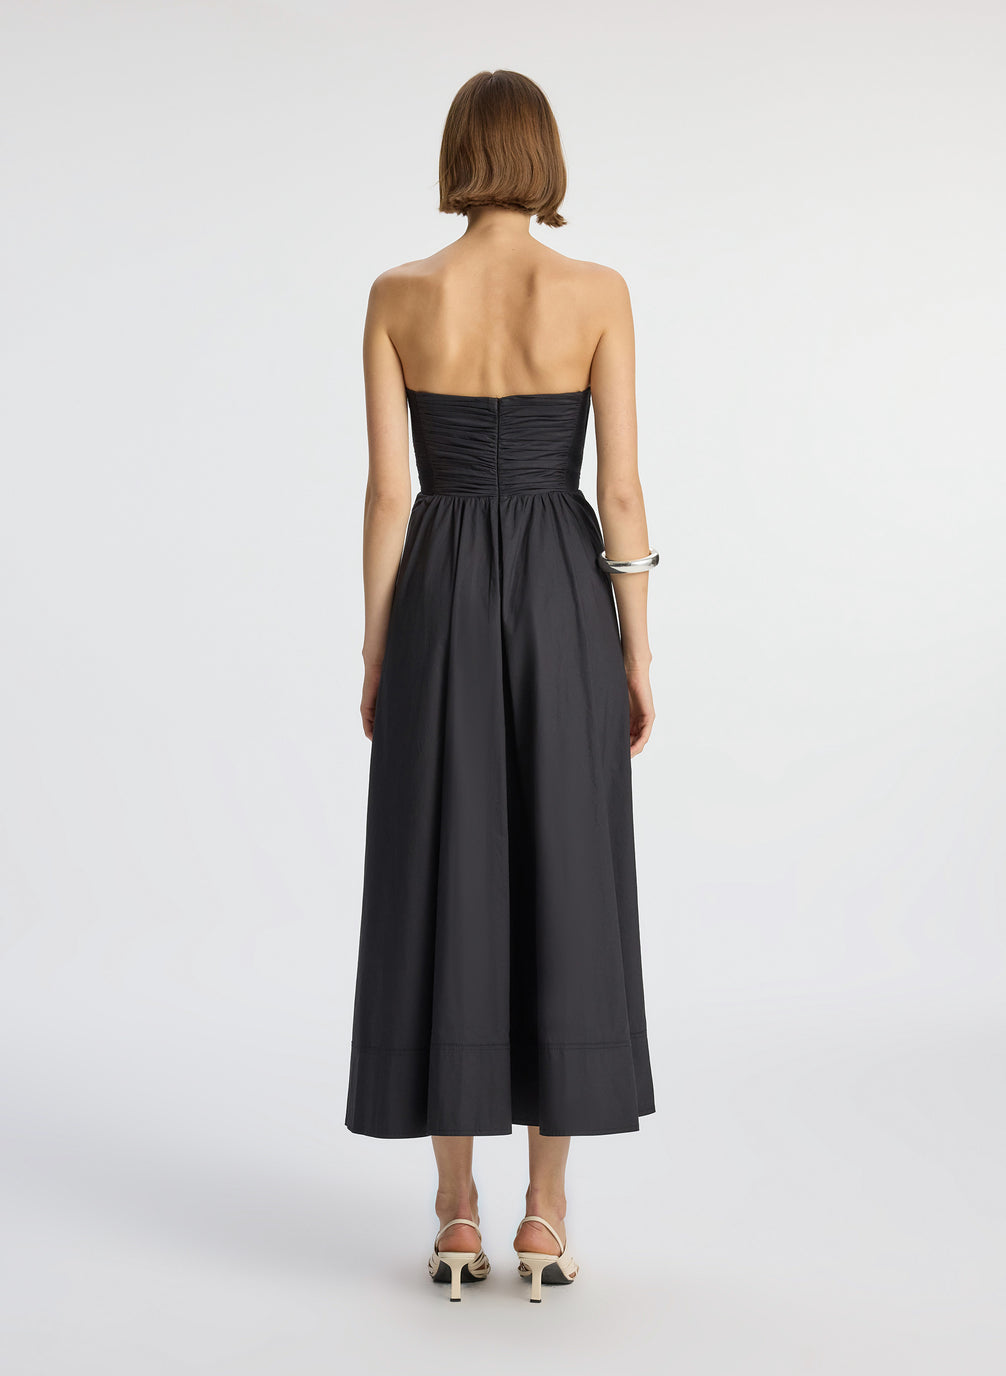 back view of woman wearing black strapless midi dress